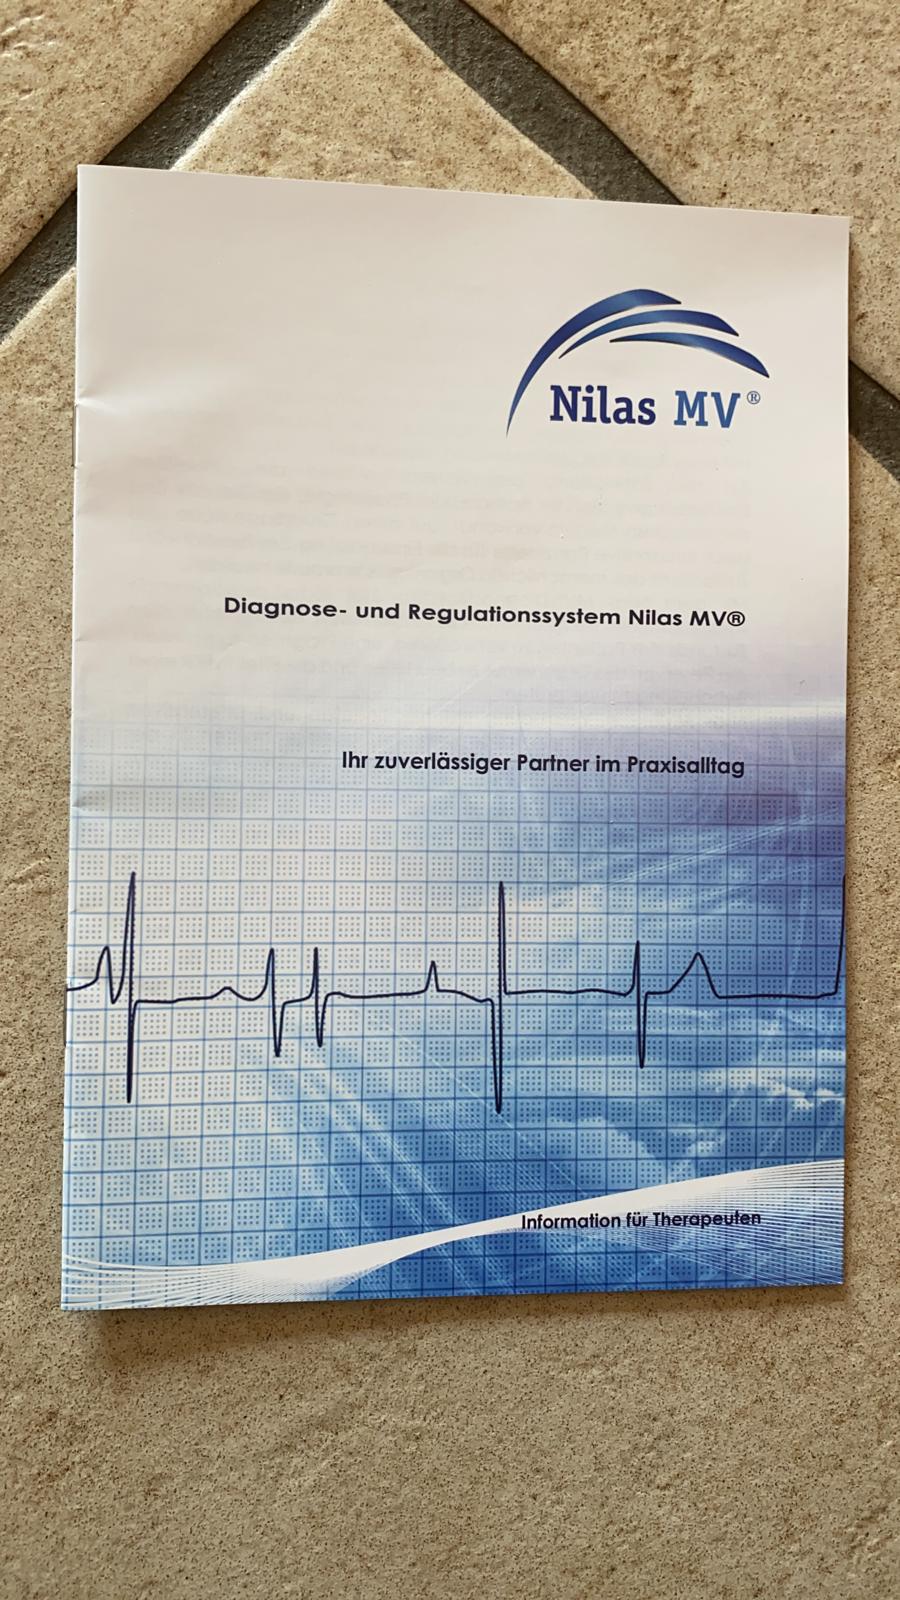 Verkauft!!! Nilas MV Diagnosesystem Version 4.0.5